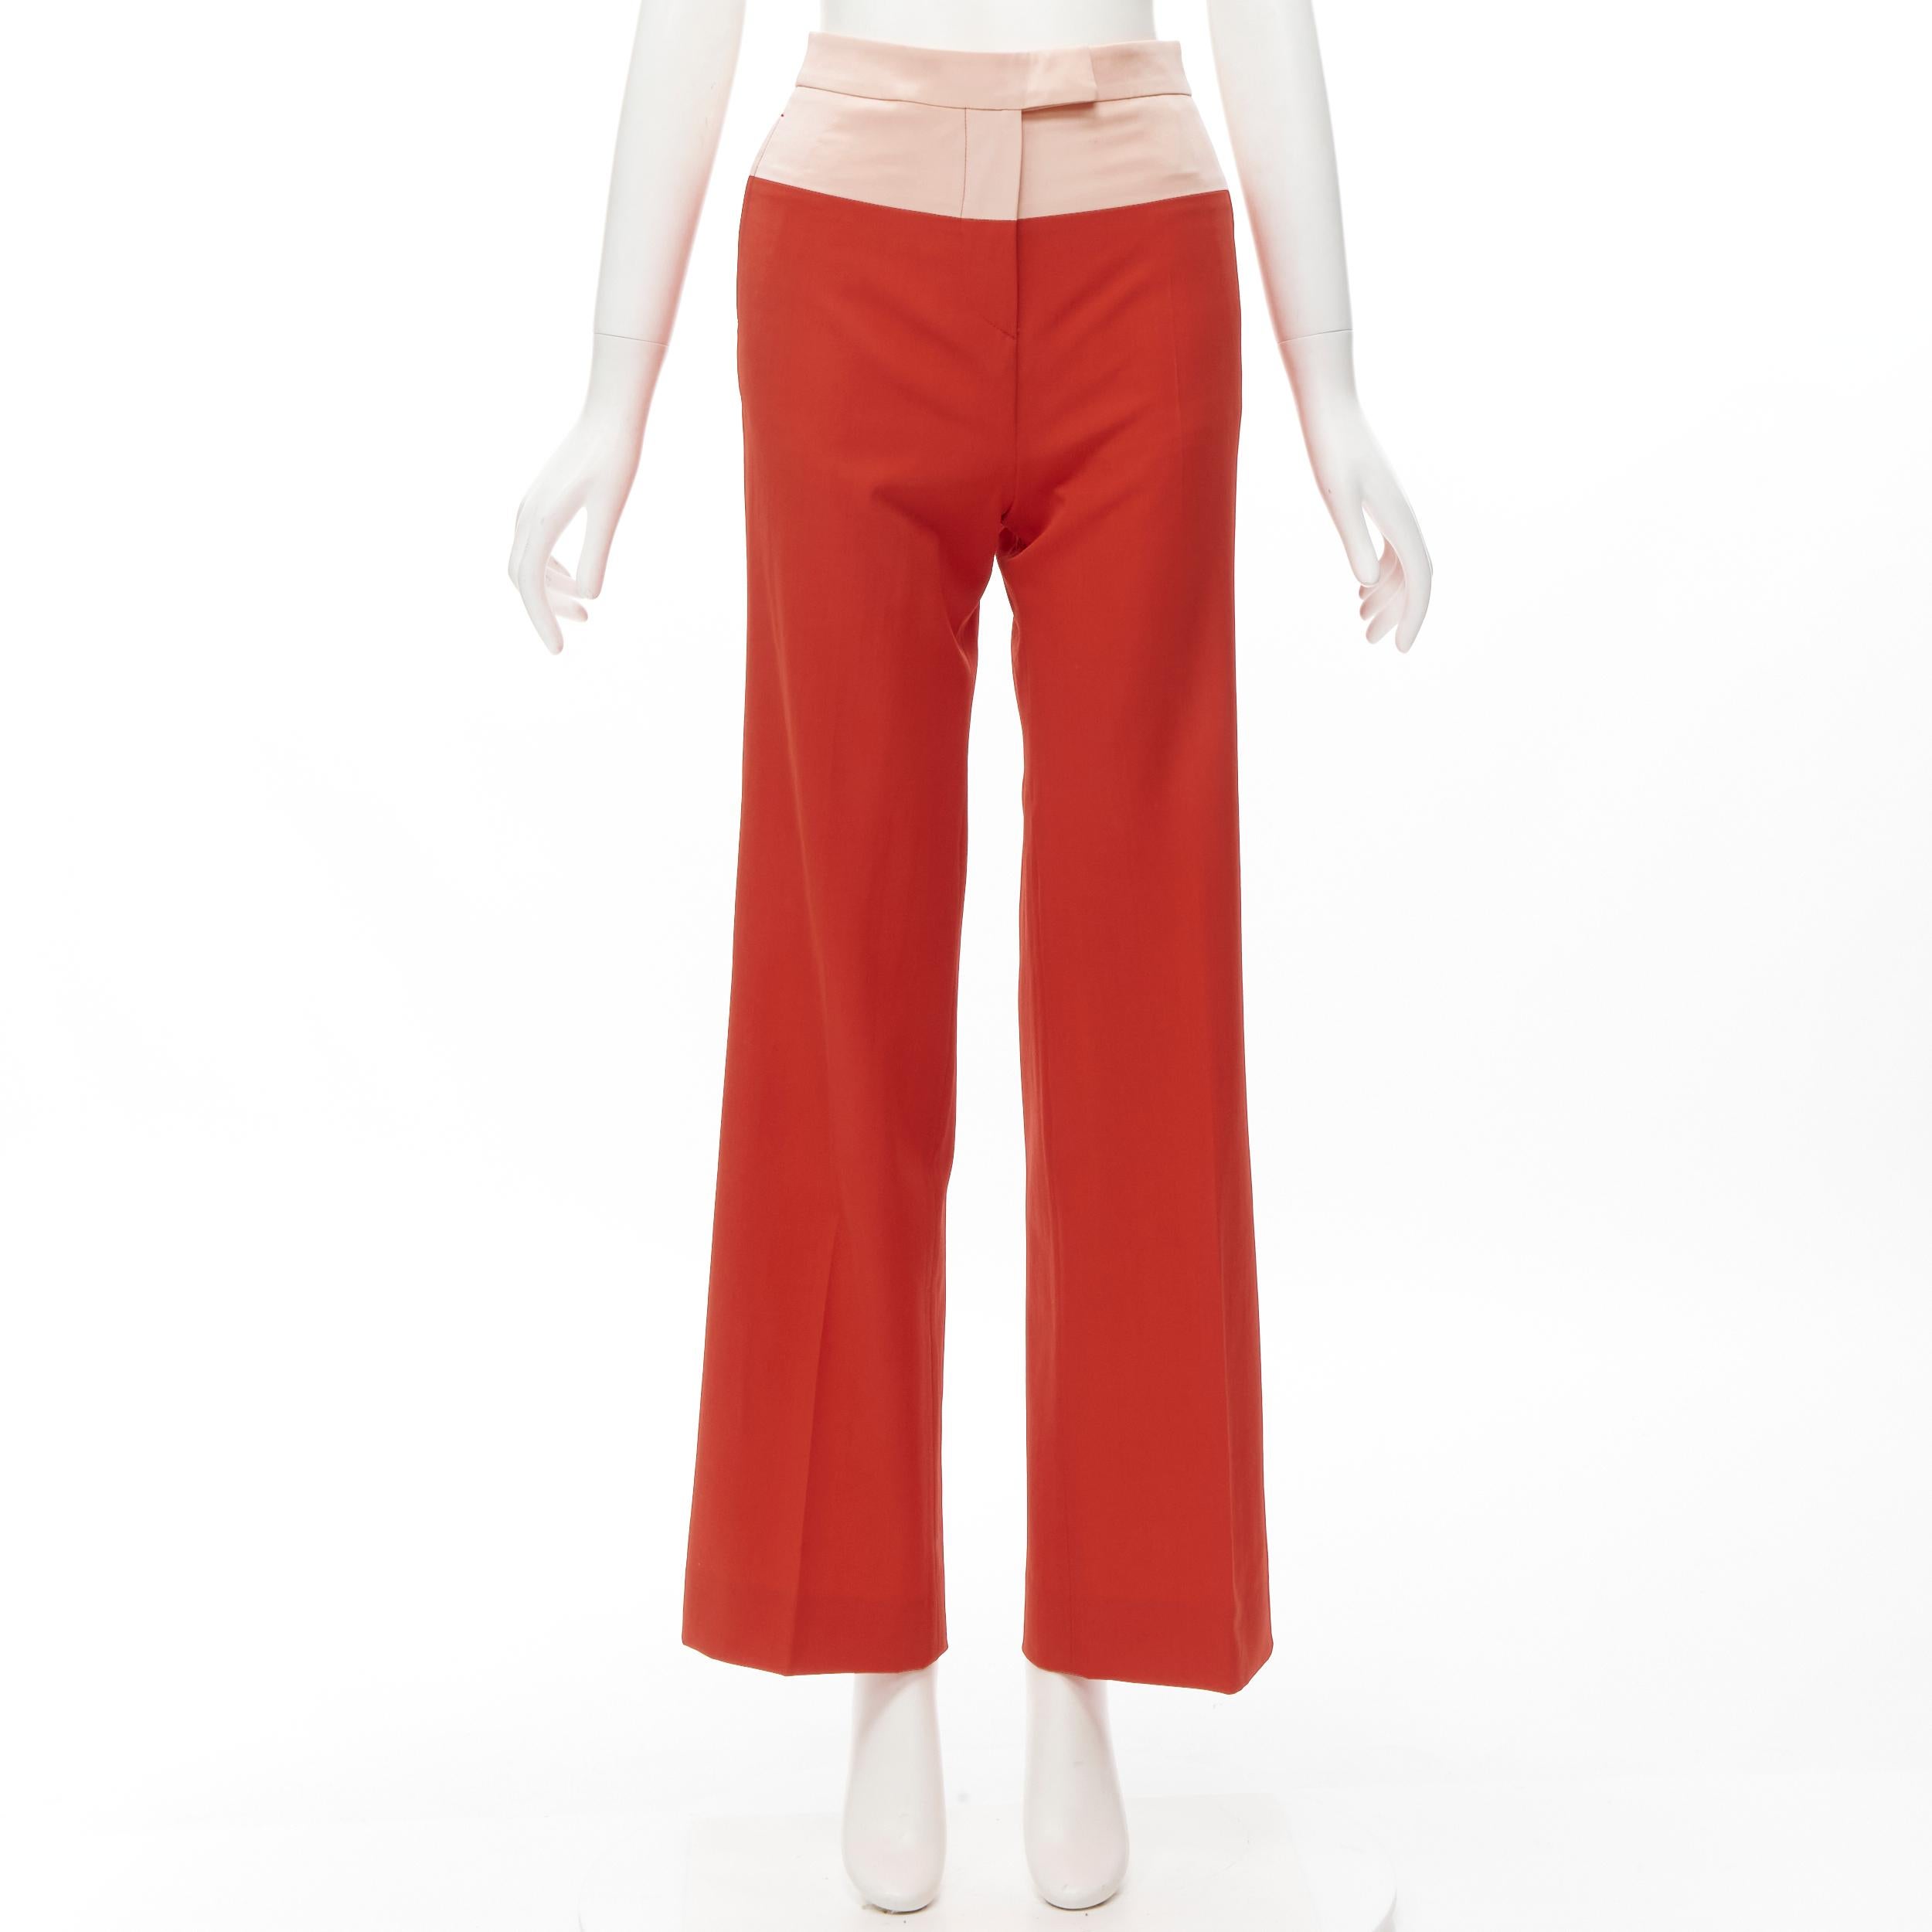 BOTTEGA VENETA 100% wool nude beige red colorblocked wide leg pants IT38 XS For Sale 2